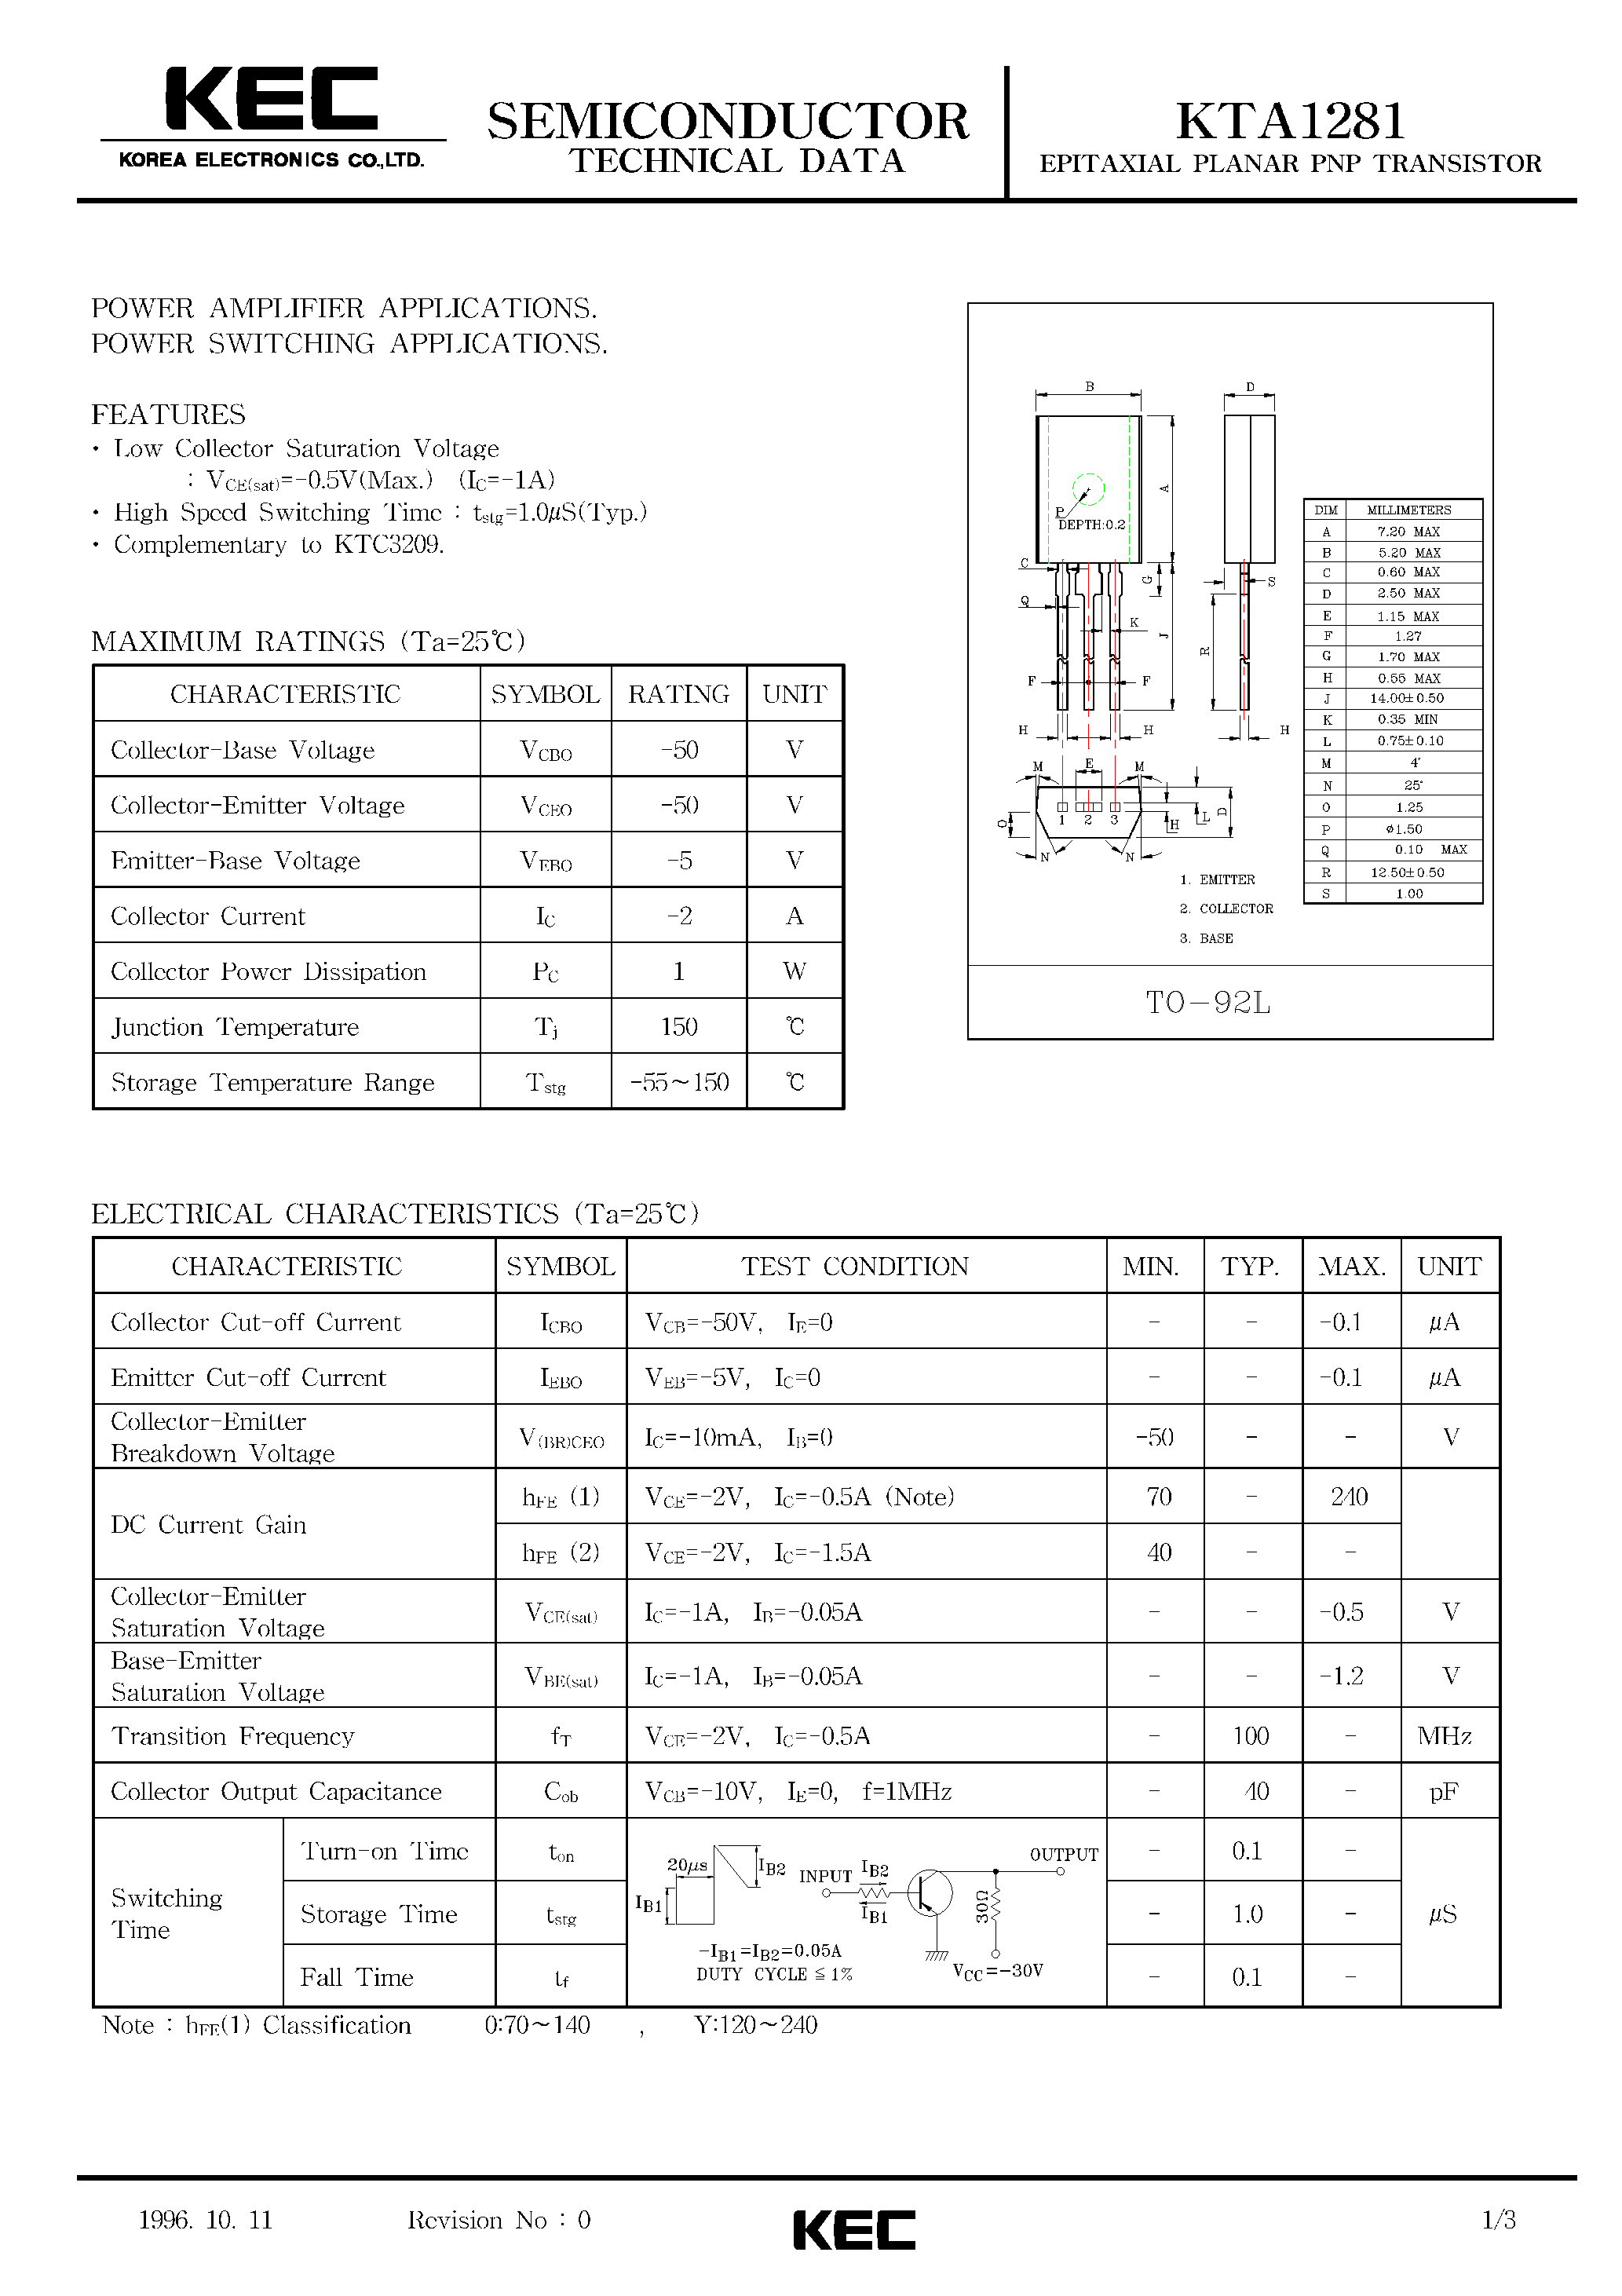 Datasheet KTA1281 - EPITAXIAL PLANAR PNP TRANSISTOR (POWER AMPLIFIER/ POWER SWITCHING) page 1